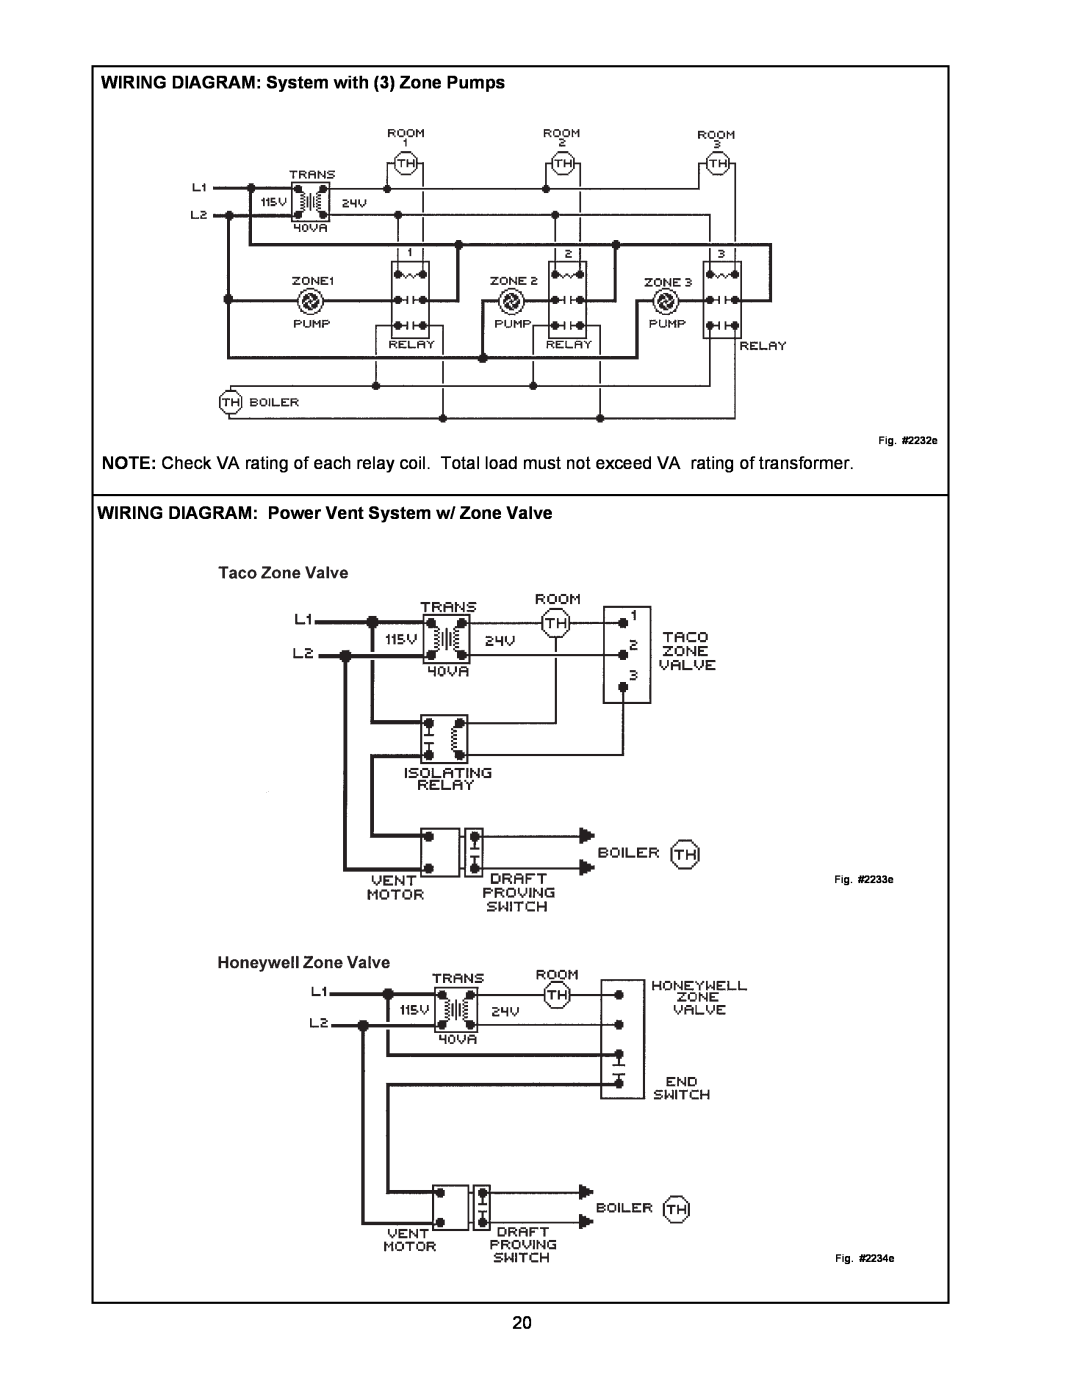 Raypak 0135B, 0030B WIRING DIAGRAM System with 3 Zone Pumps, WIRING DIAGRAM Power Vent System w/ Zone Valve, Fig. #2232e 